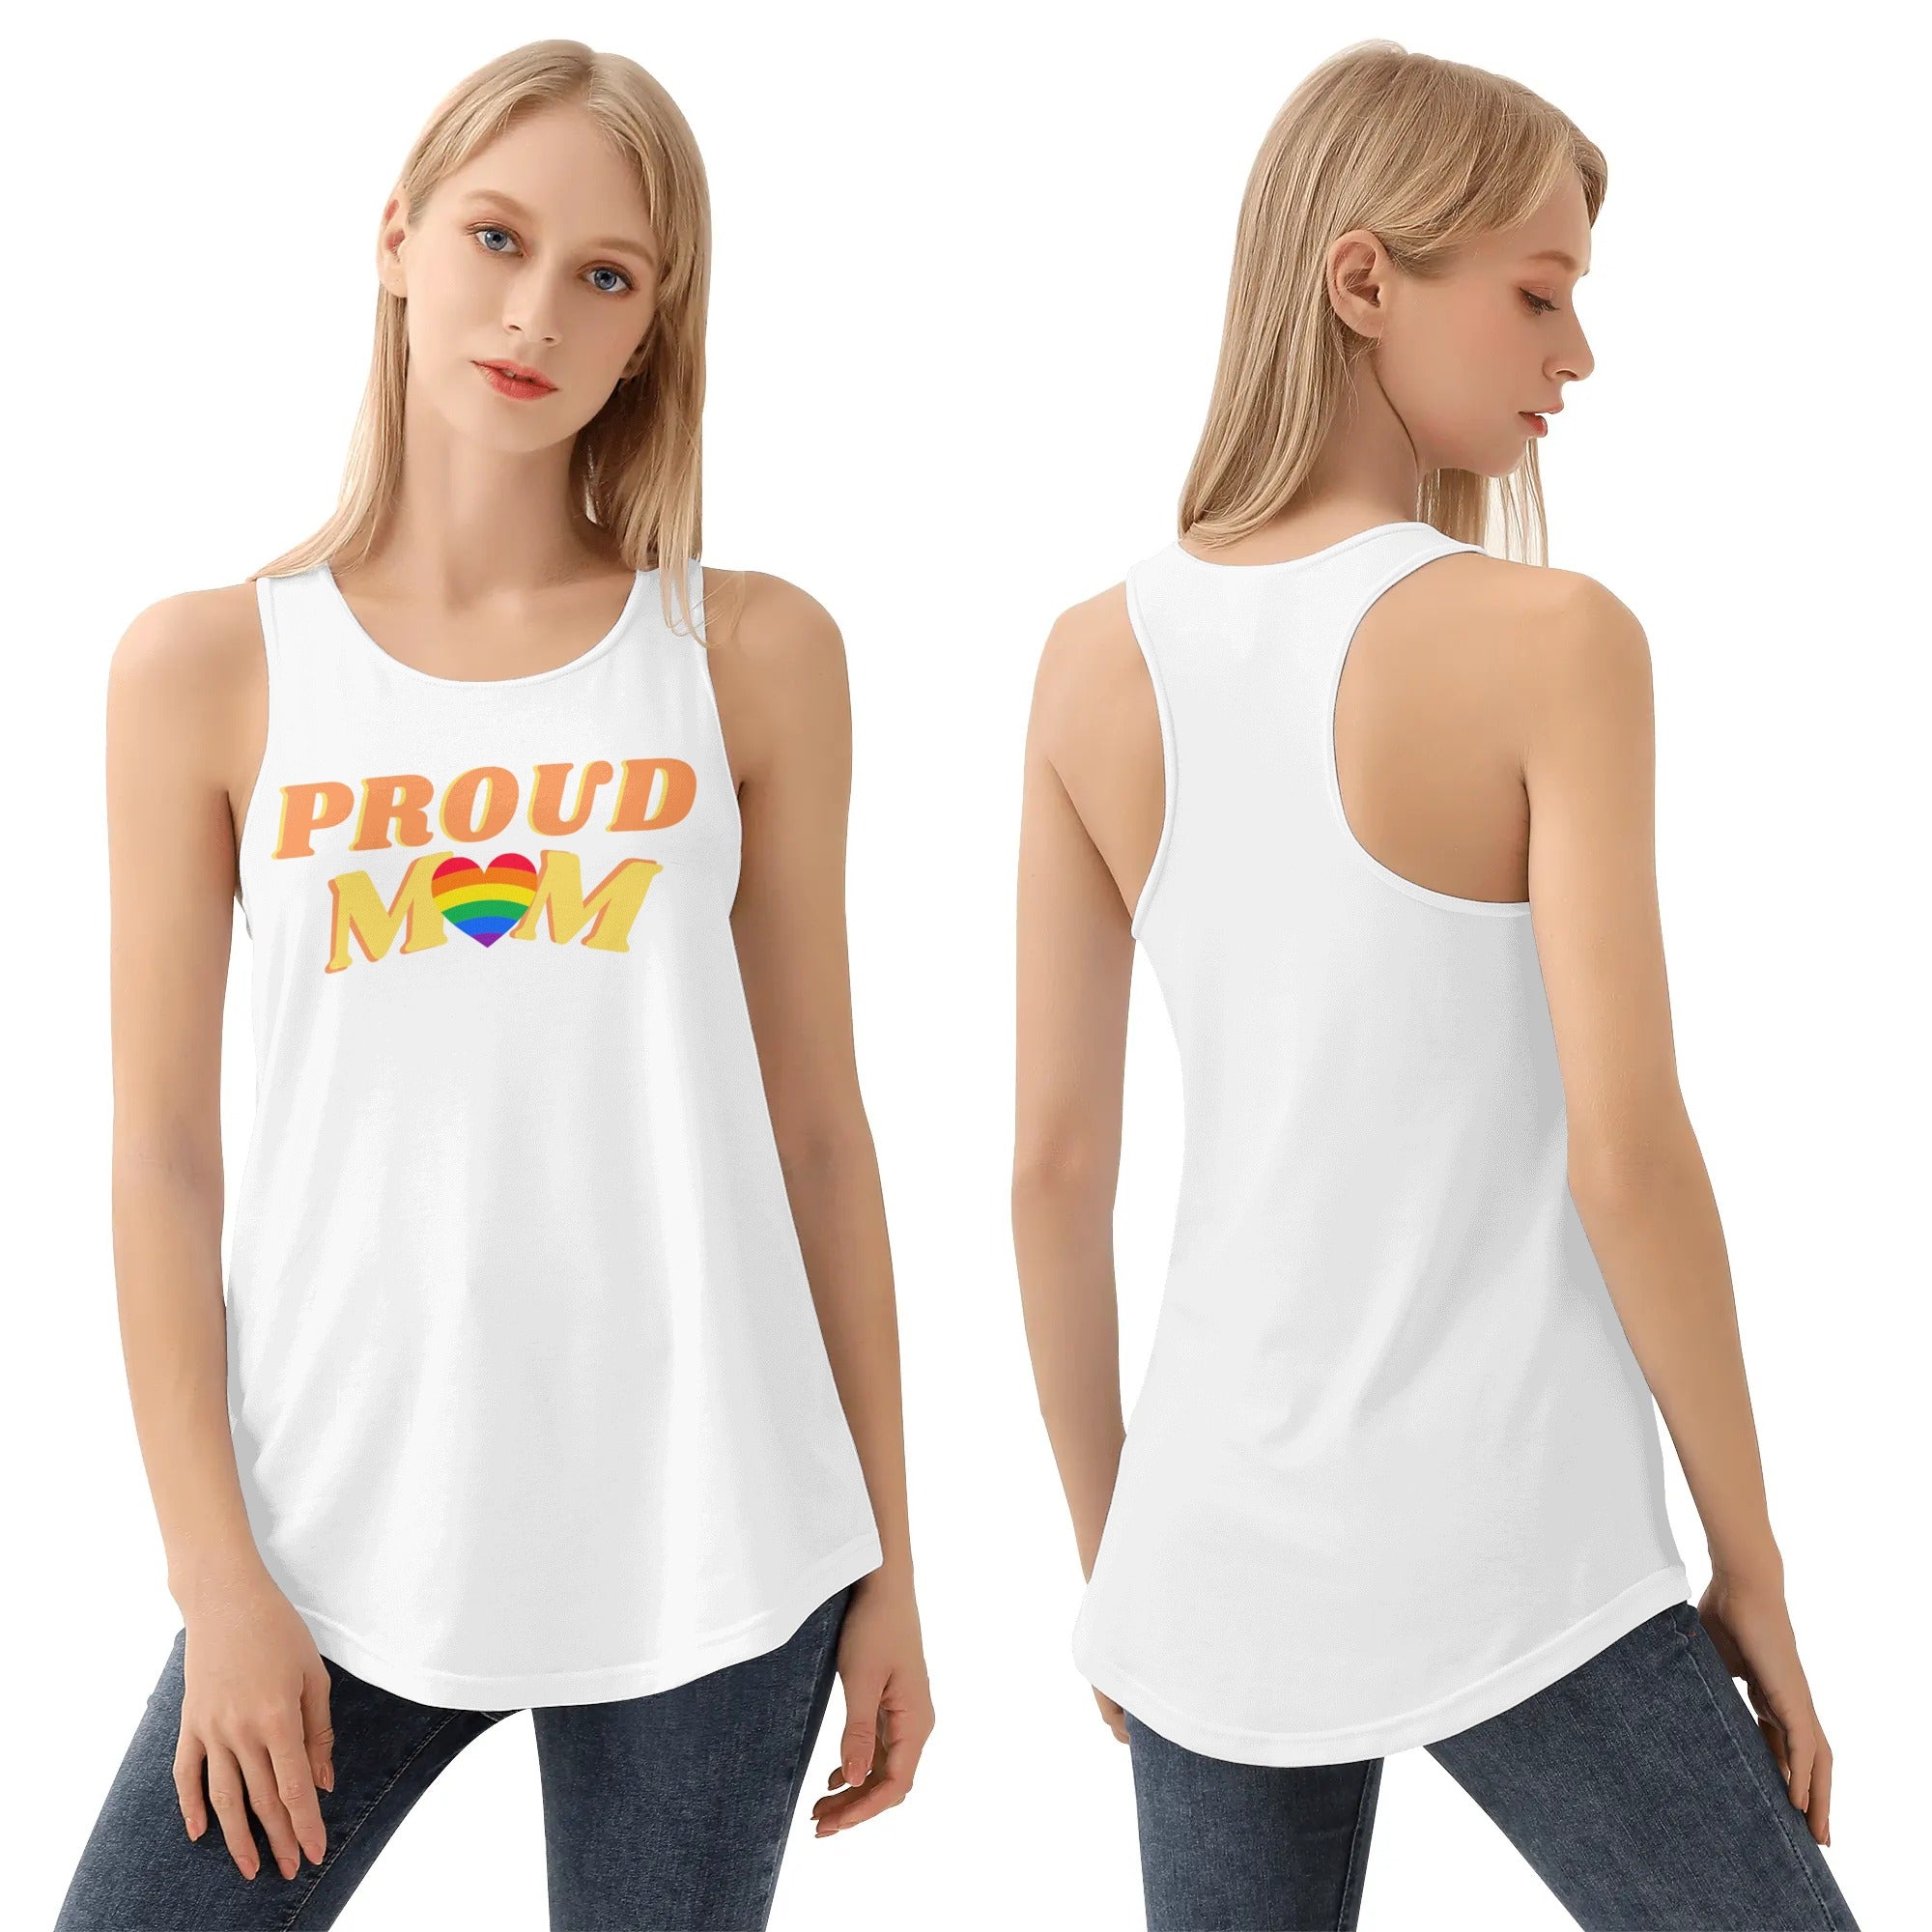 Proud Mom LGBT Pride Tank Top - Rose Gold Co. Shop